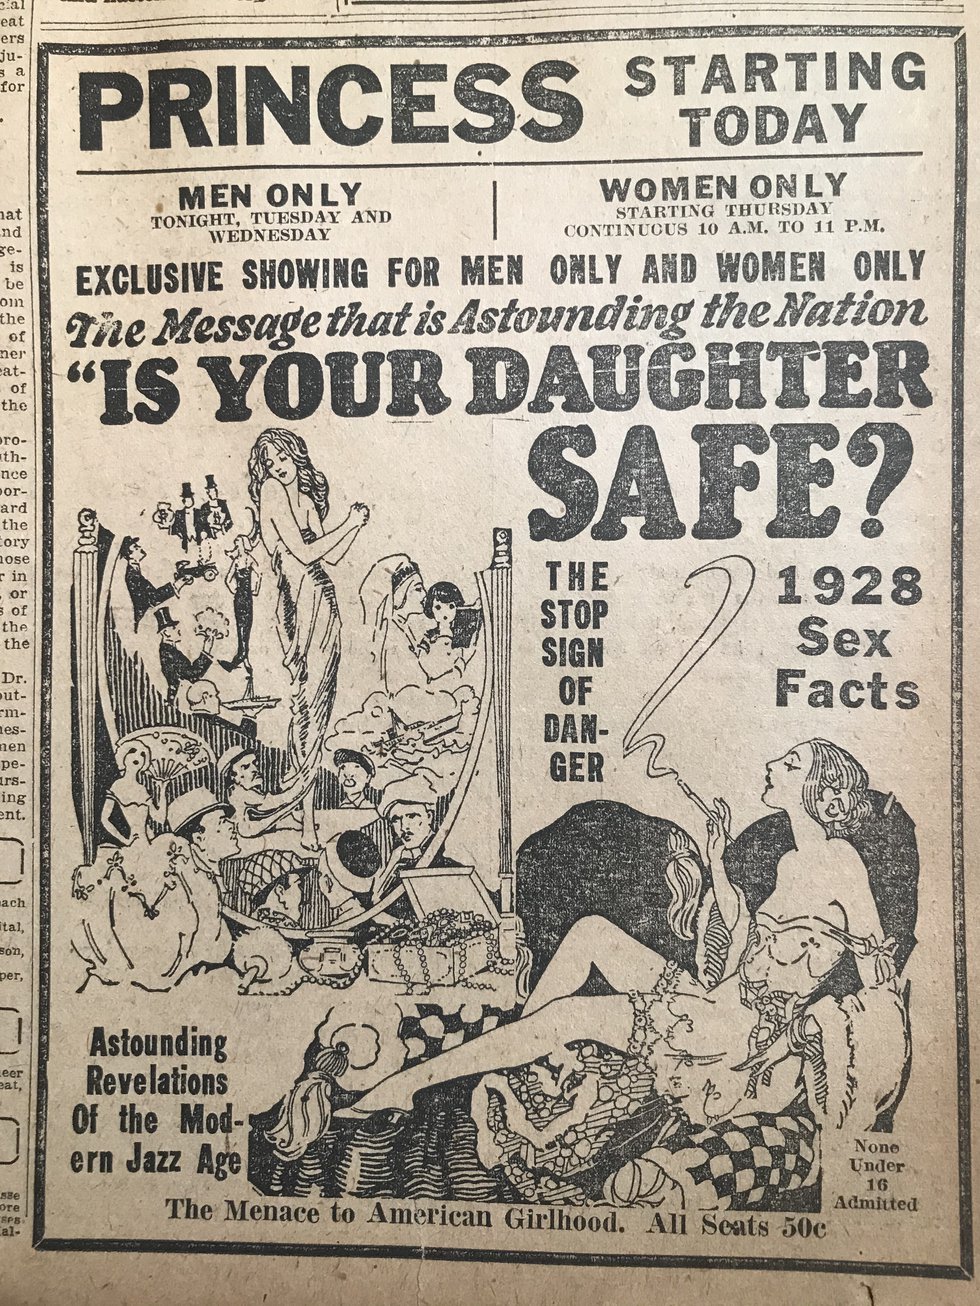 DaughterSafe-ad-1928.jpg